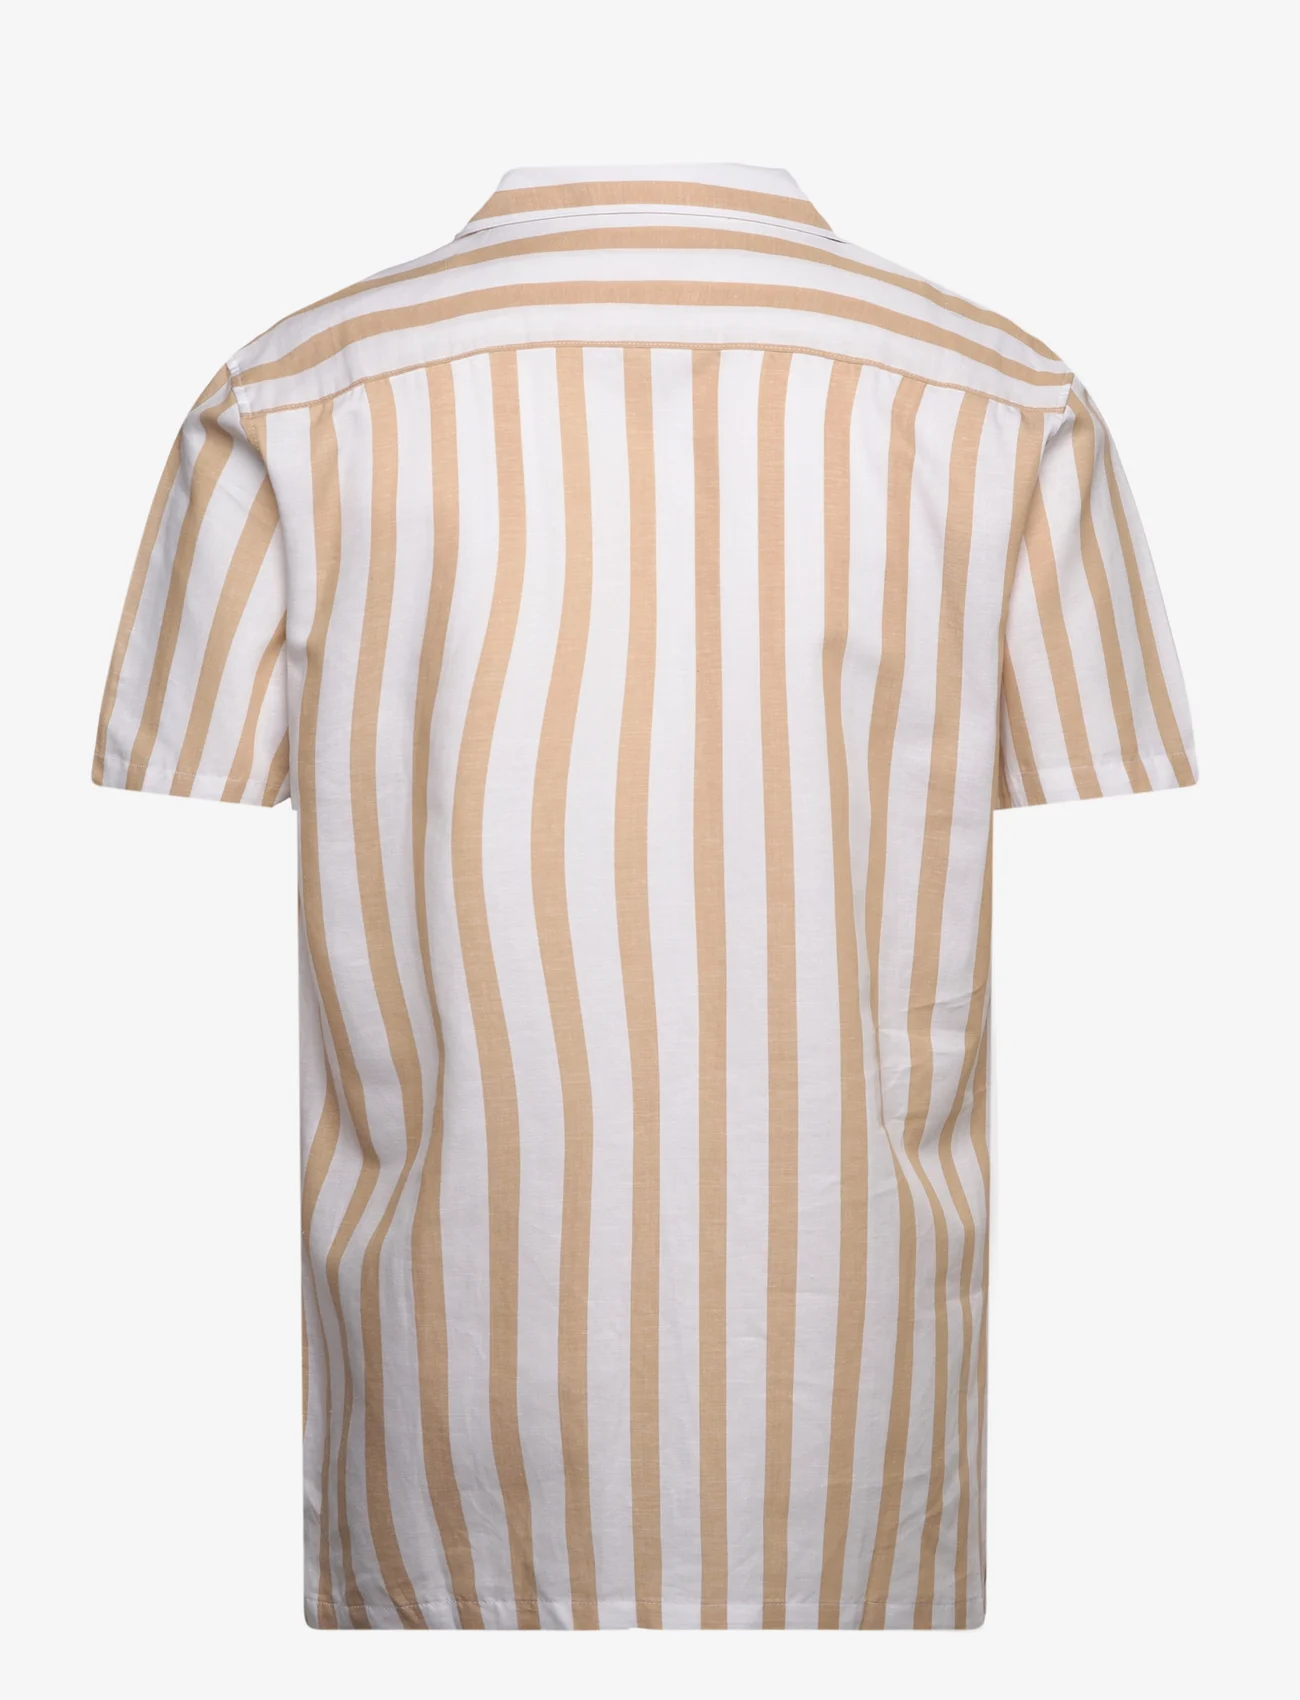 Lindbergh - Cot/lin striped resort S/S - short-sleeved shirts - sand - 1